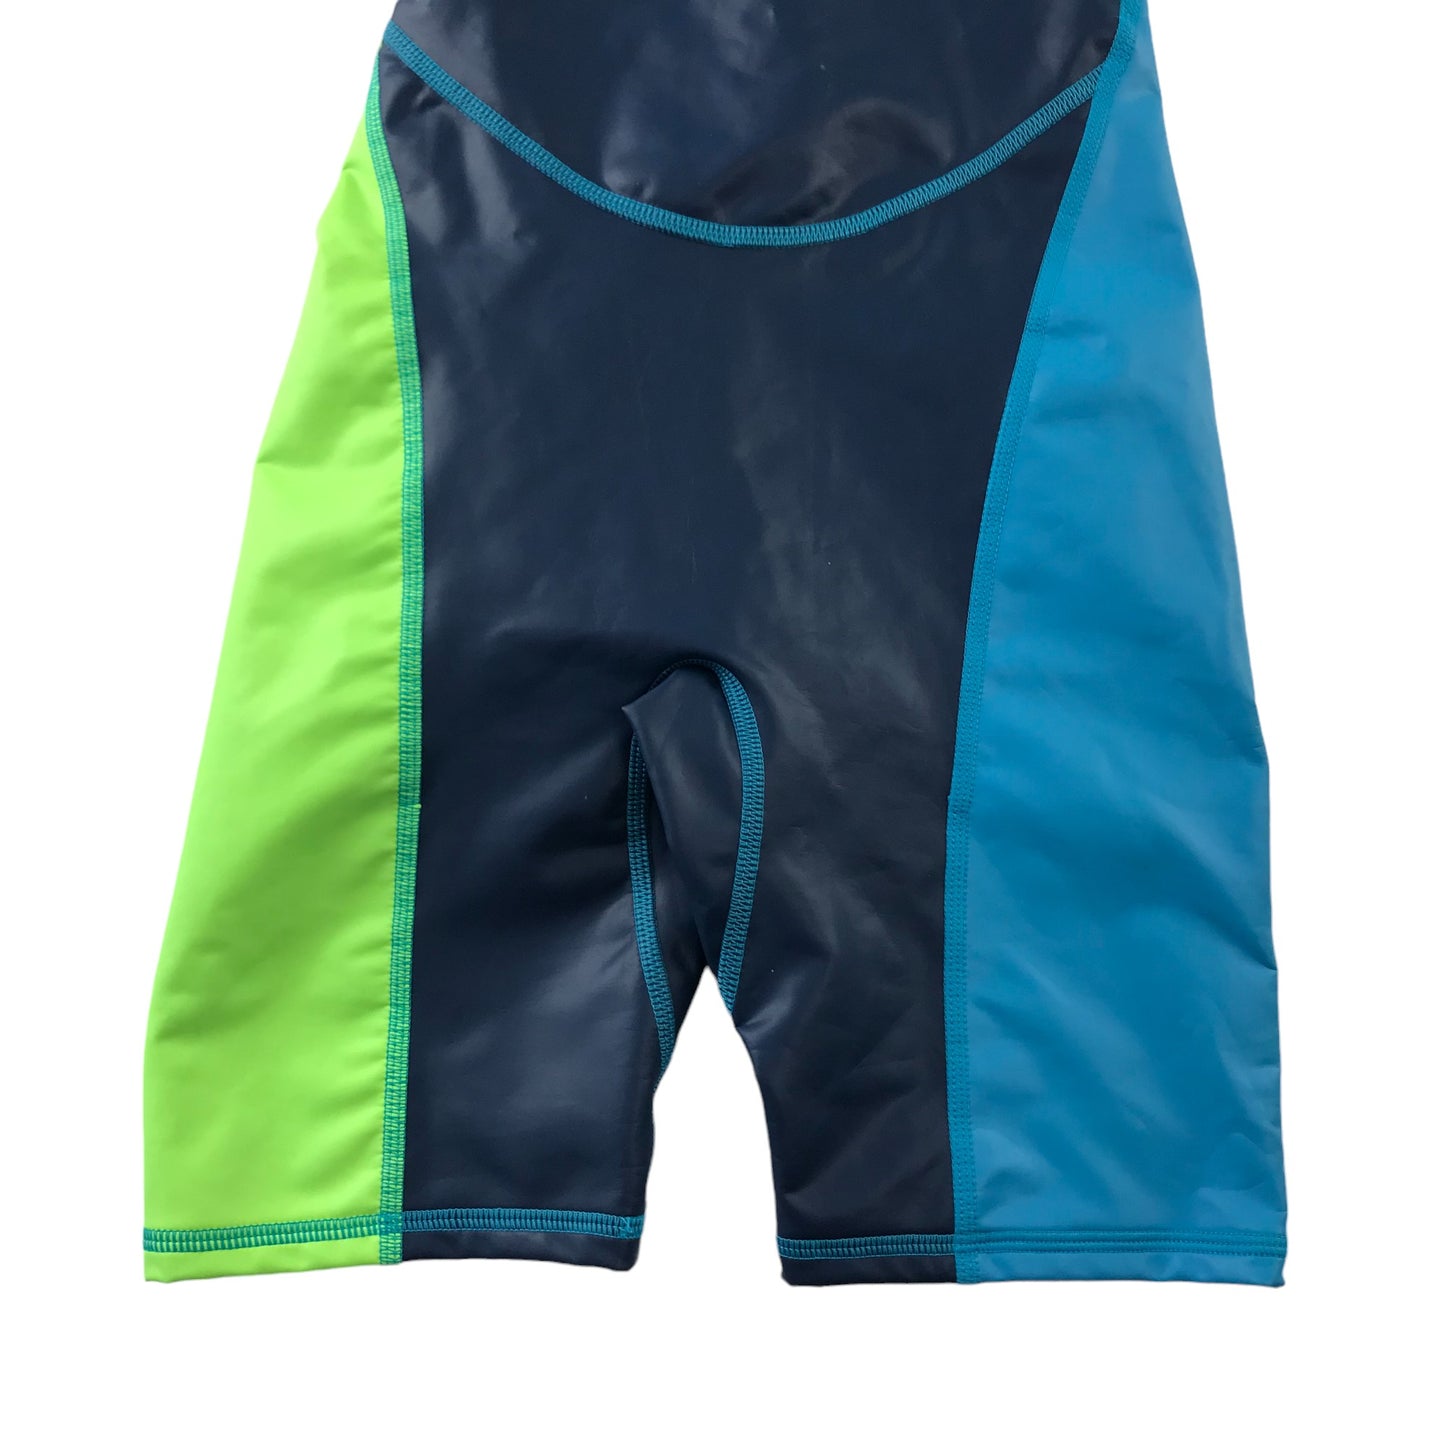 Decathlon Swim Onesie Age 8-9 Navy and Neon Short Legs